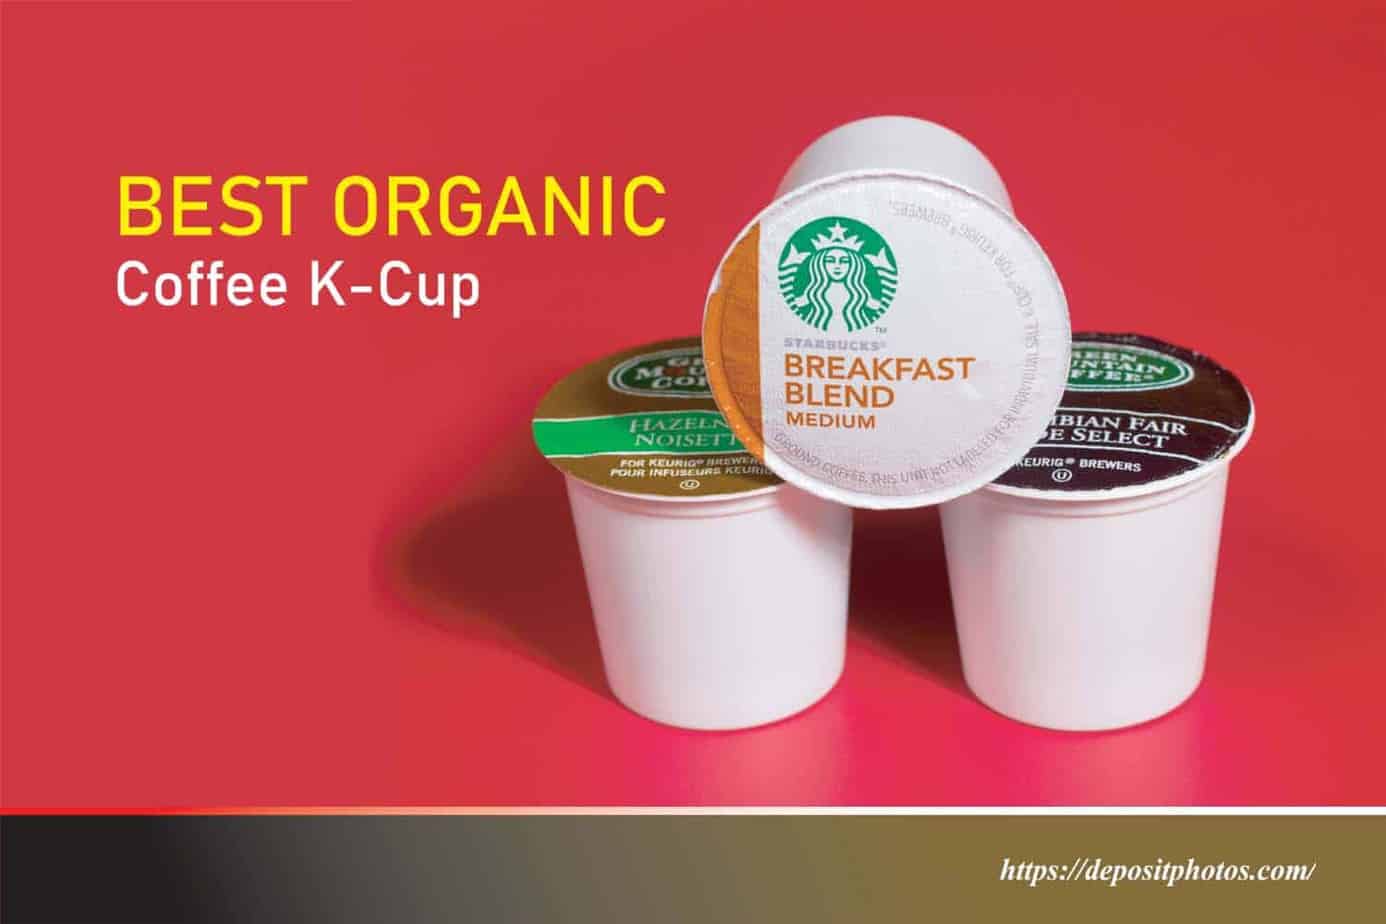 Best Organic Coffee K-Cup